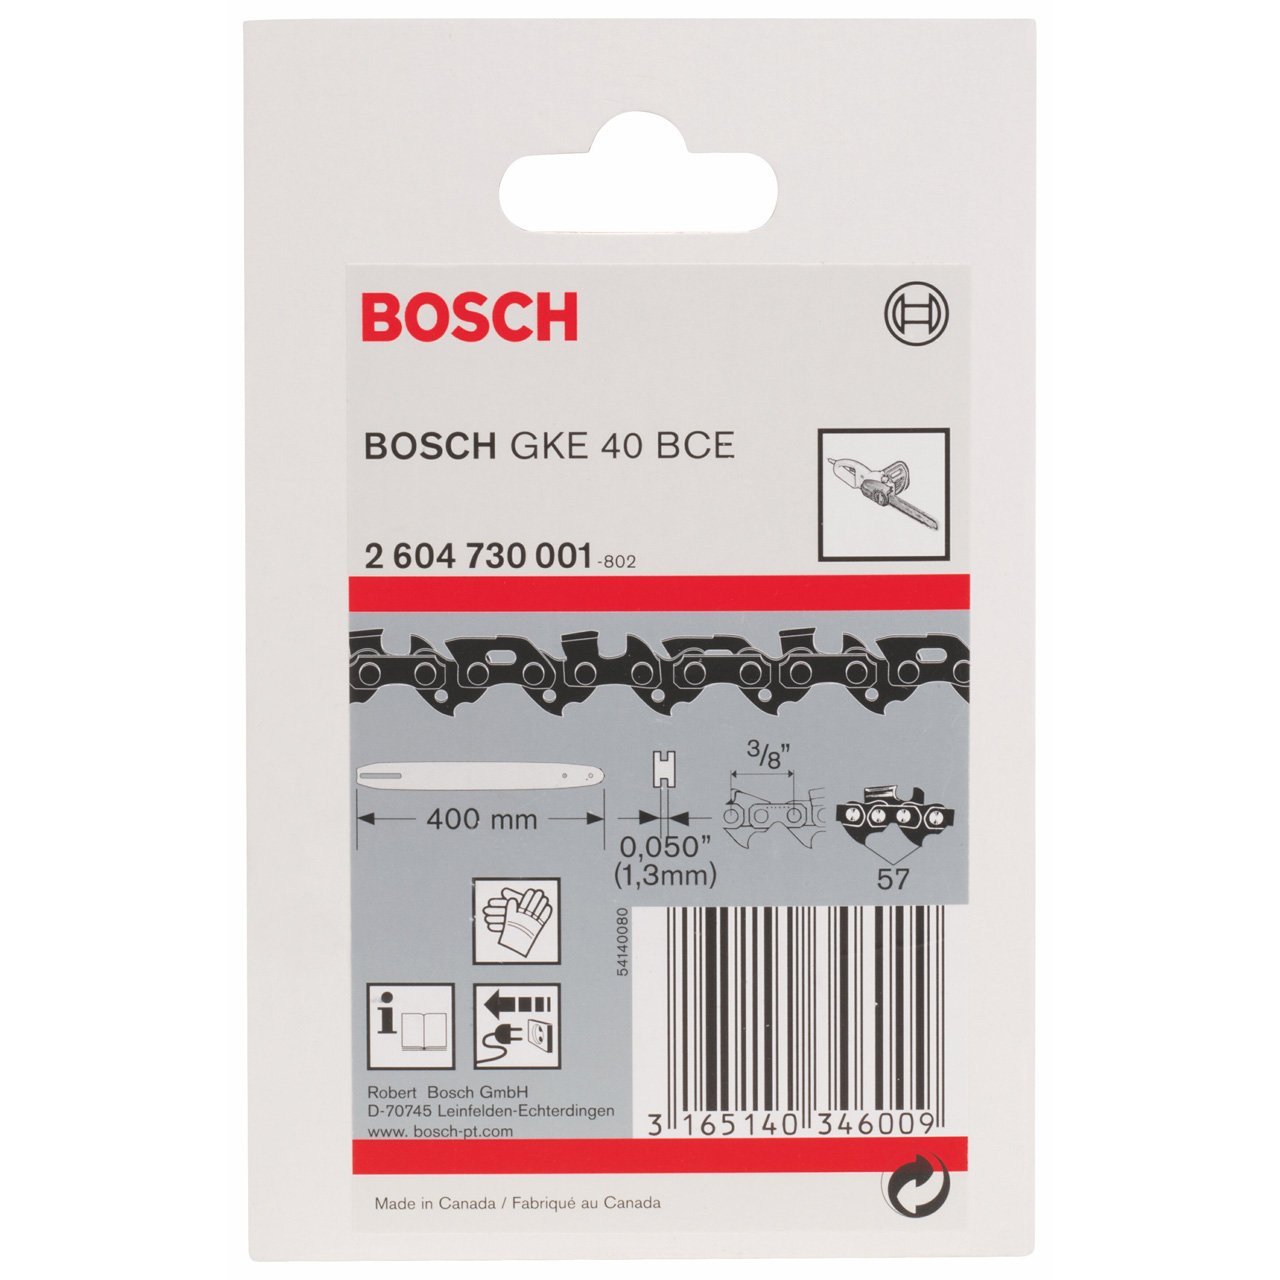 Bosch Chain GKE 40 BCE 400mm 2604730001